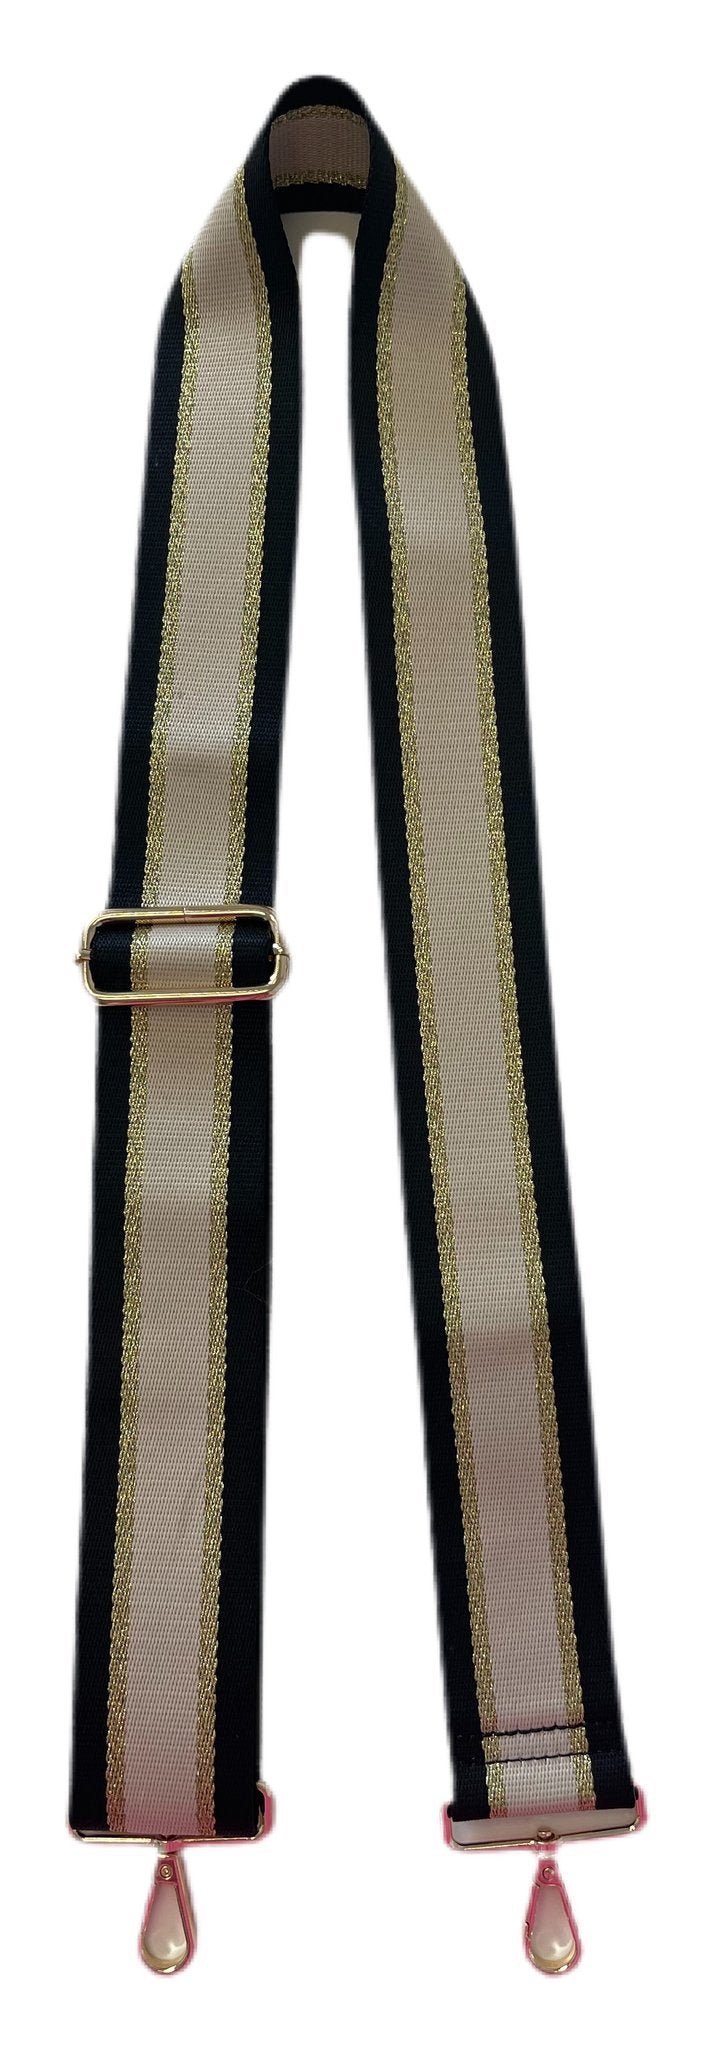 Ahdorned - Blk/Gold/Cream Stripe Adjustable Strap - Shorely Chic Boutique